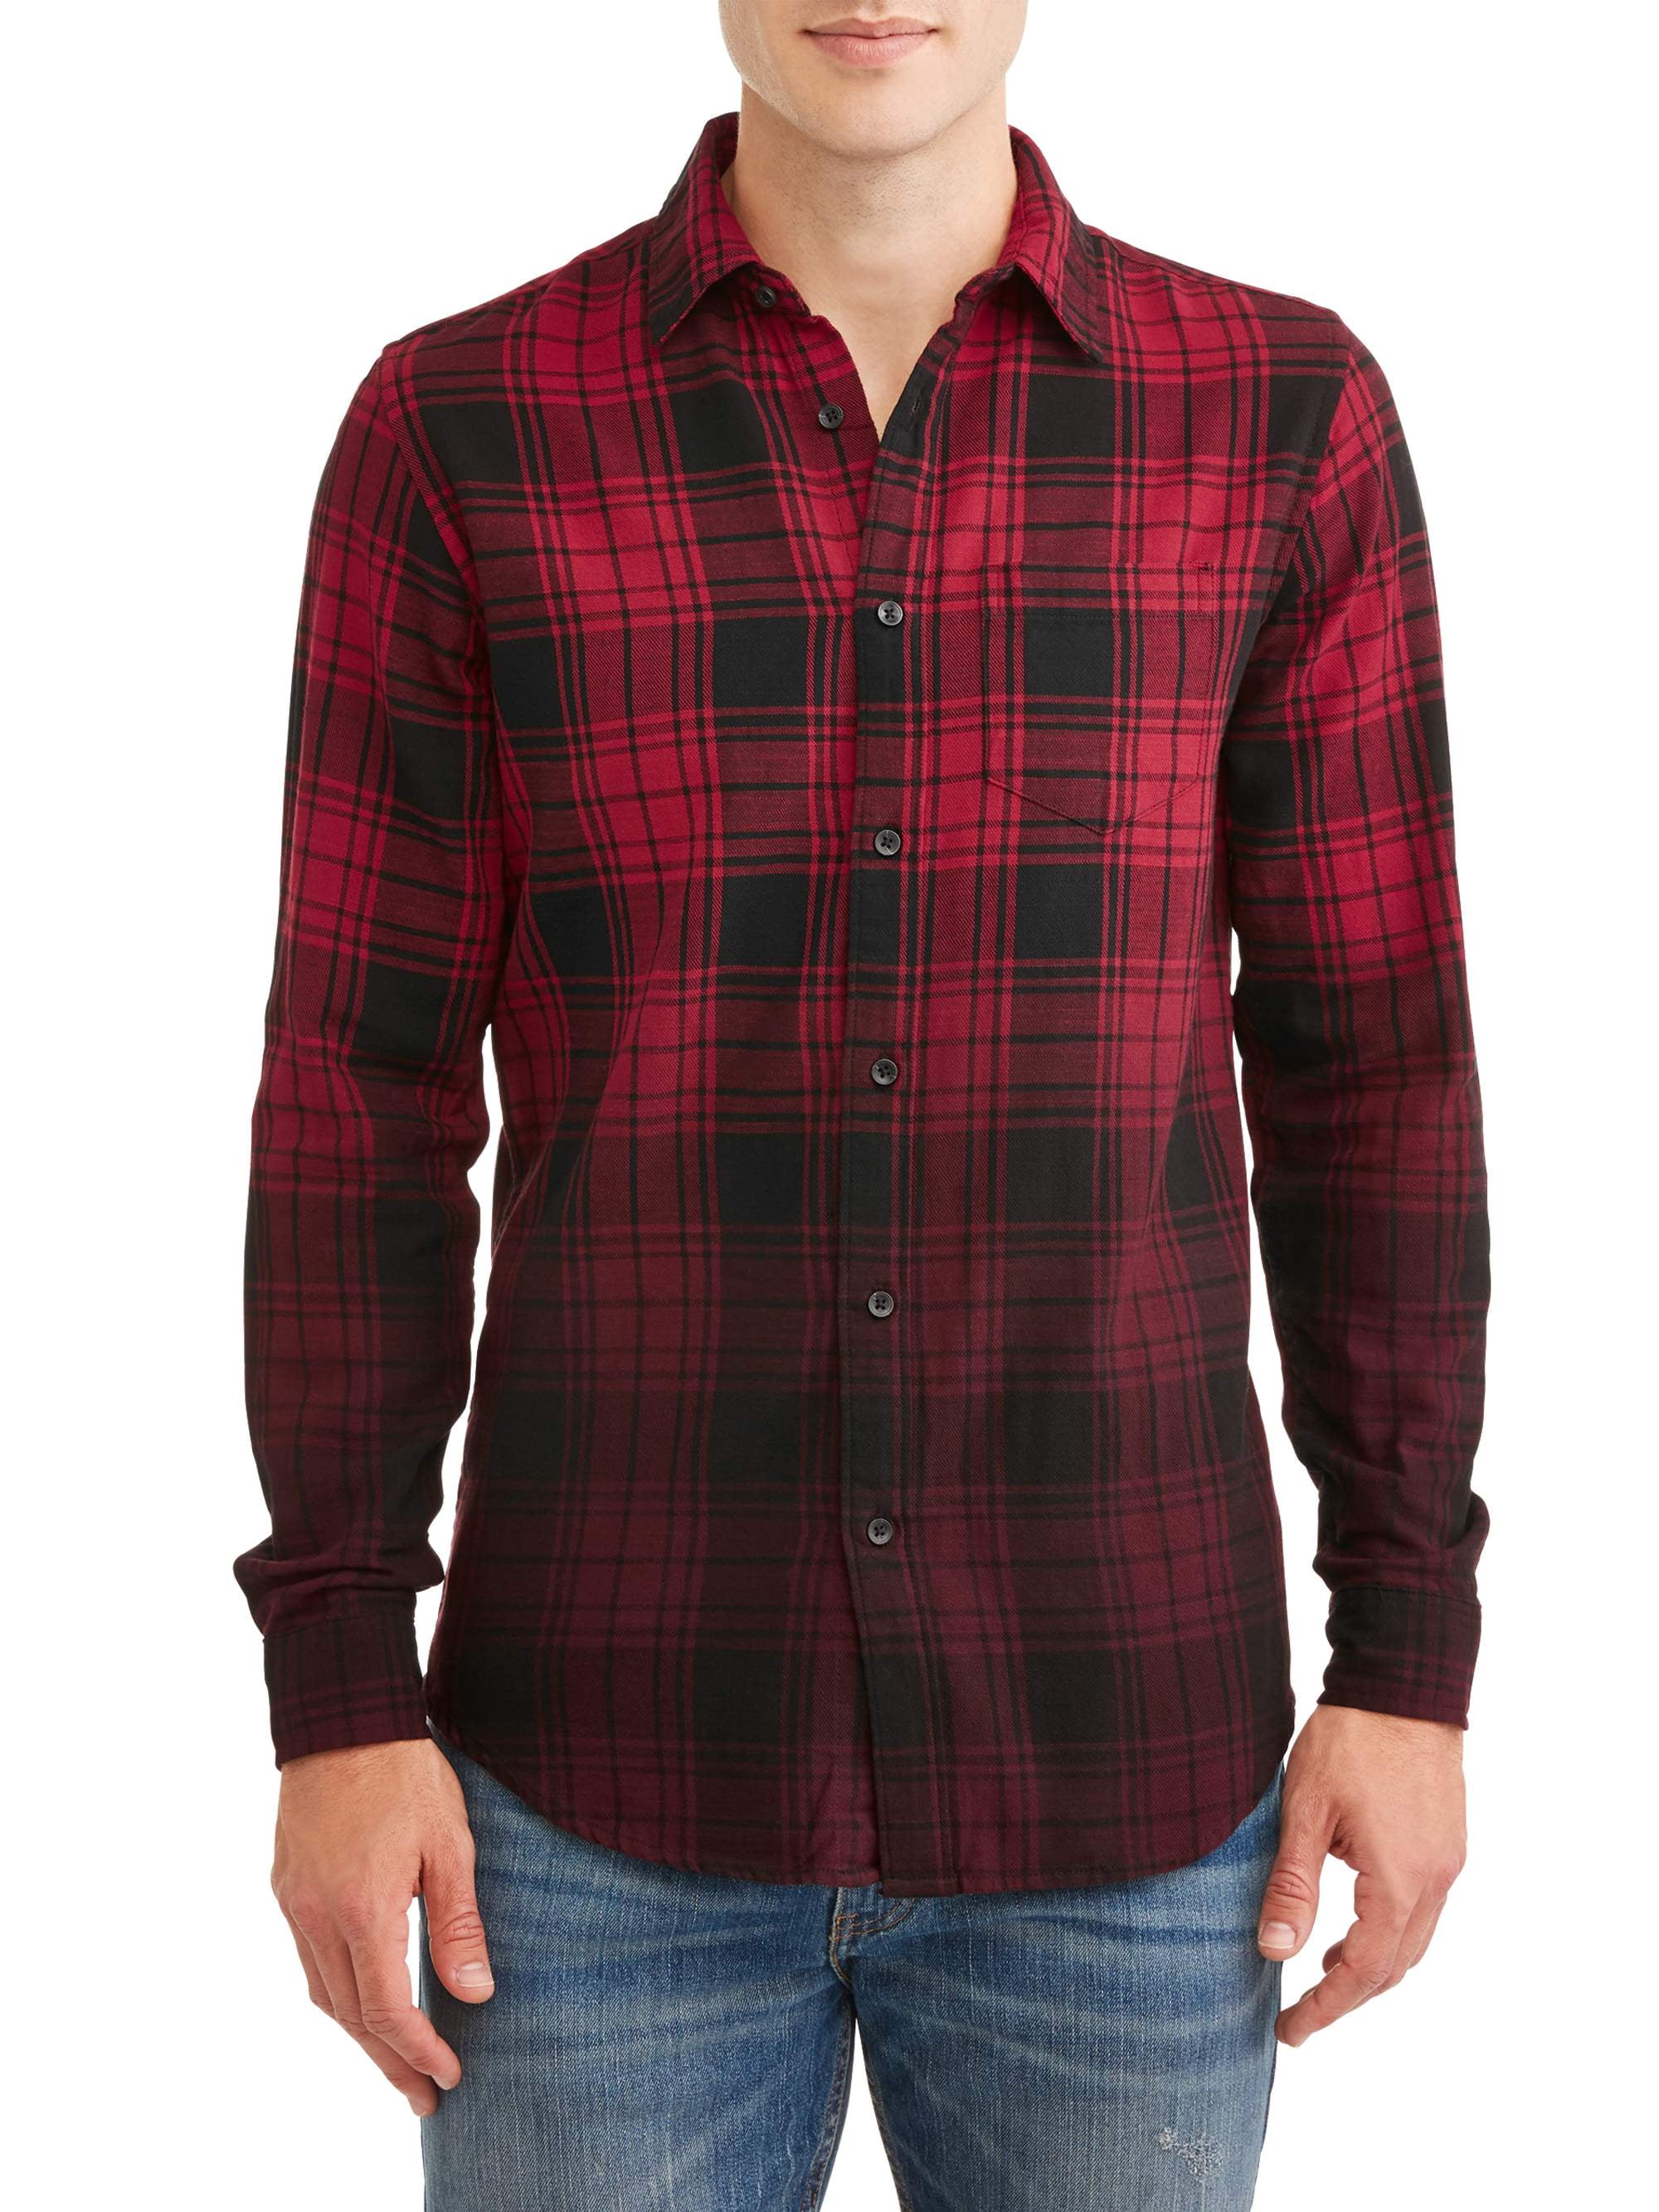 George Men's dip dye woven shirt, up to size 3xl - Walmart.com